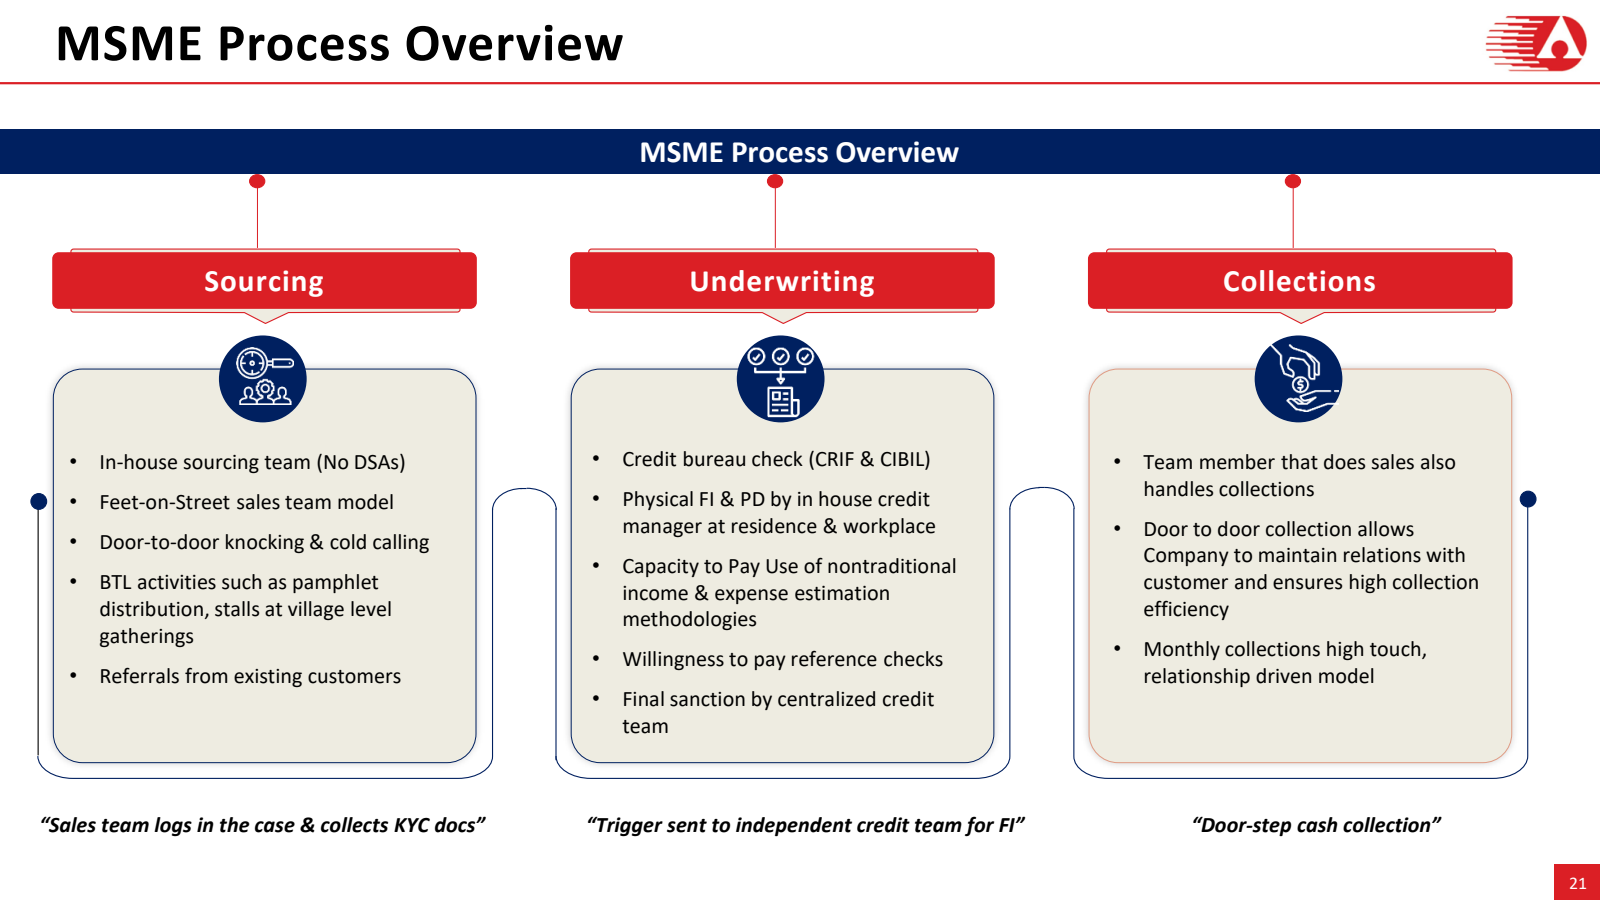 MSME Process Overvie